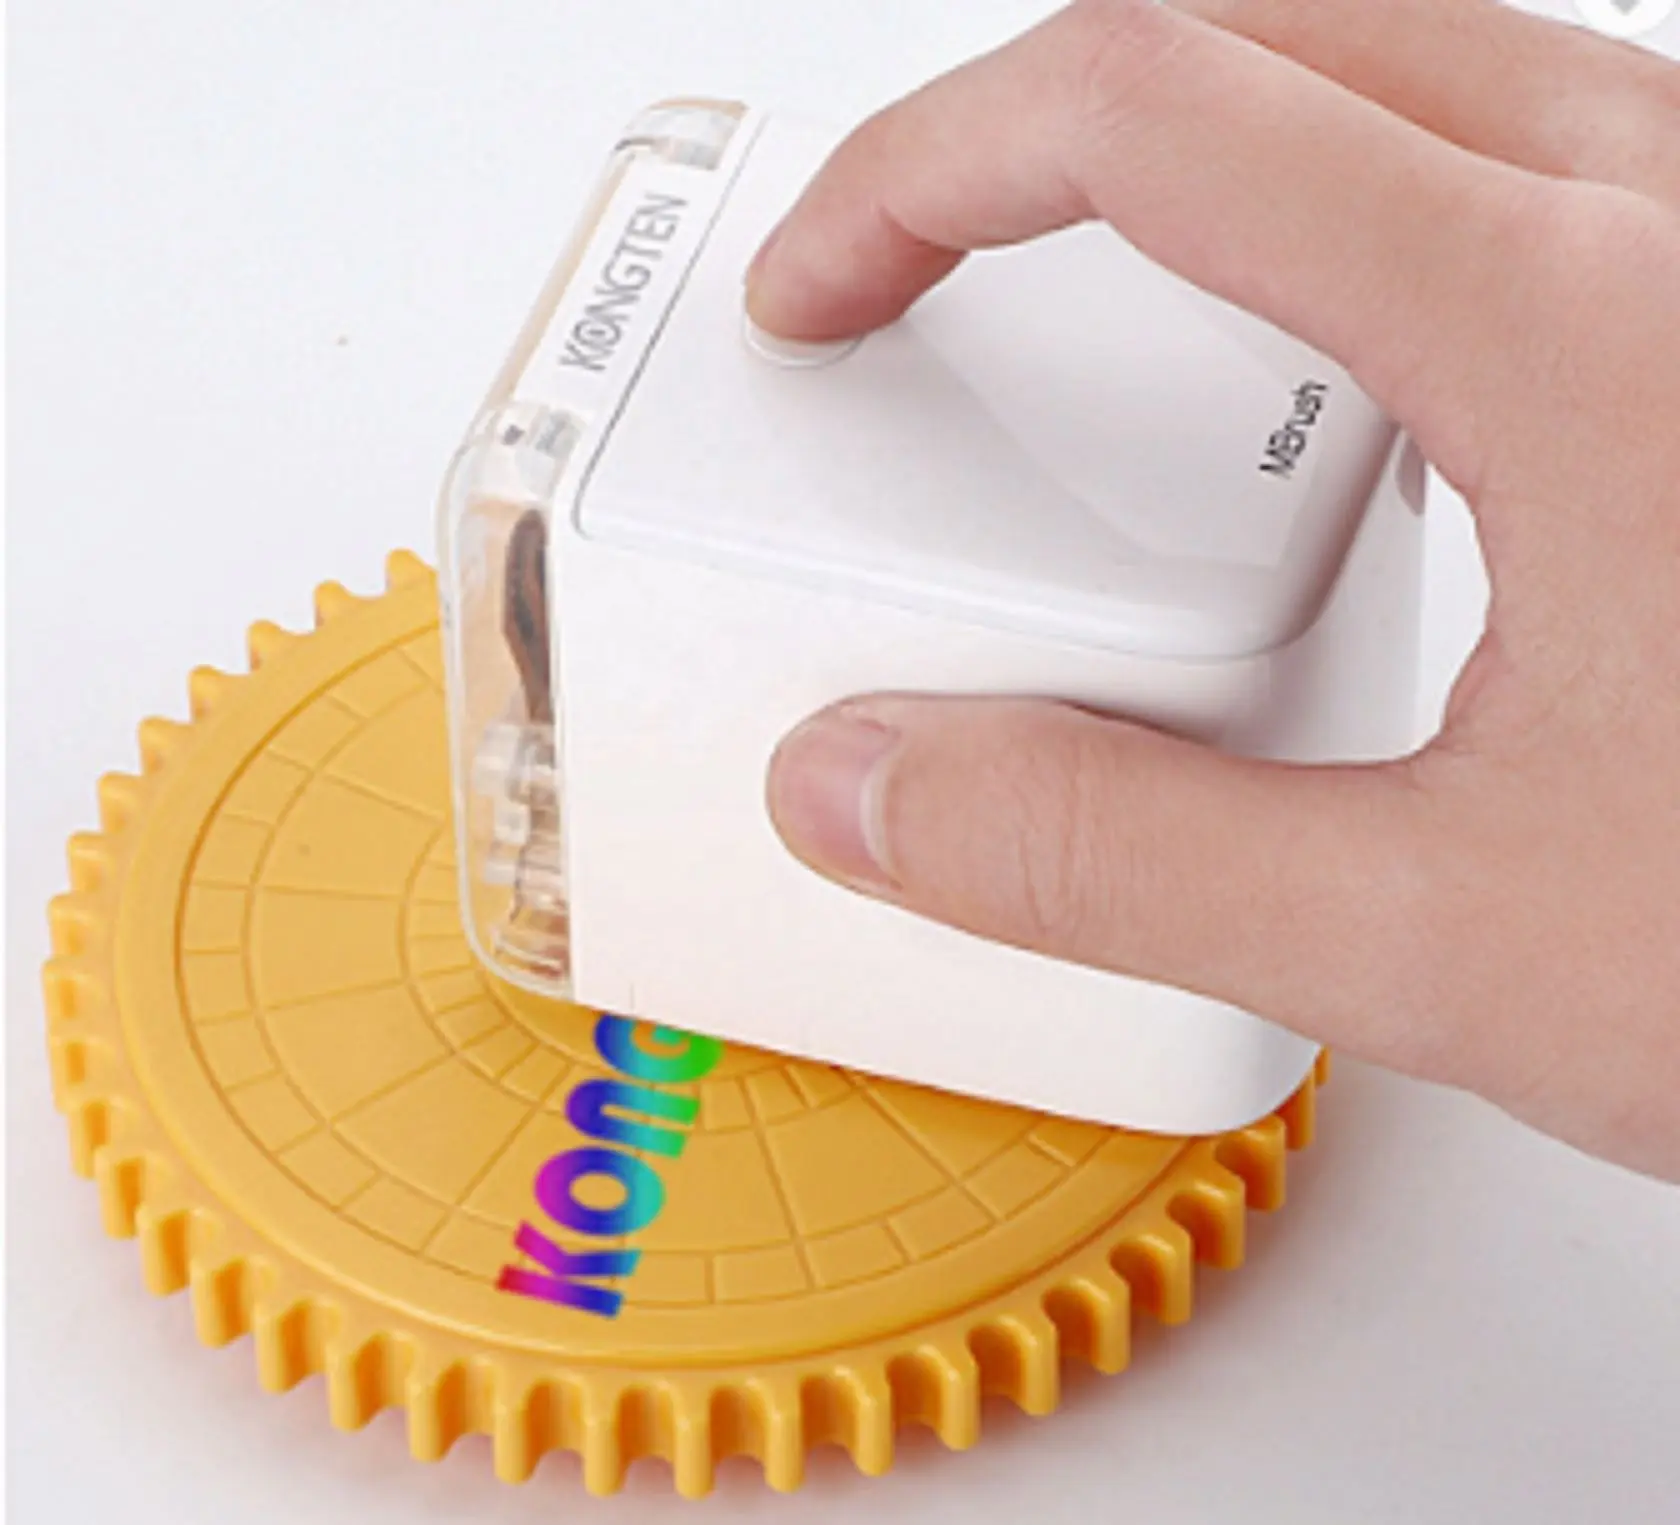 Mini Digital Printing Machine For Code Print With Hand Held Portable Colorful Inkjet Printer